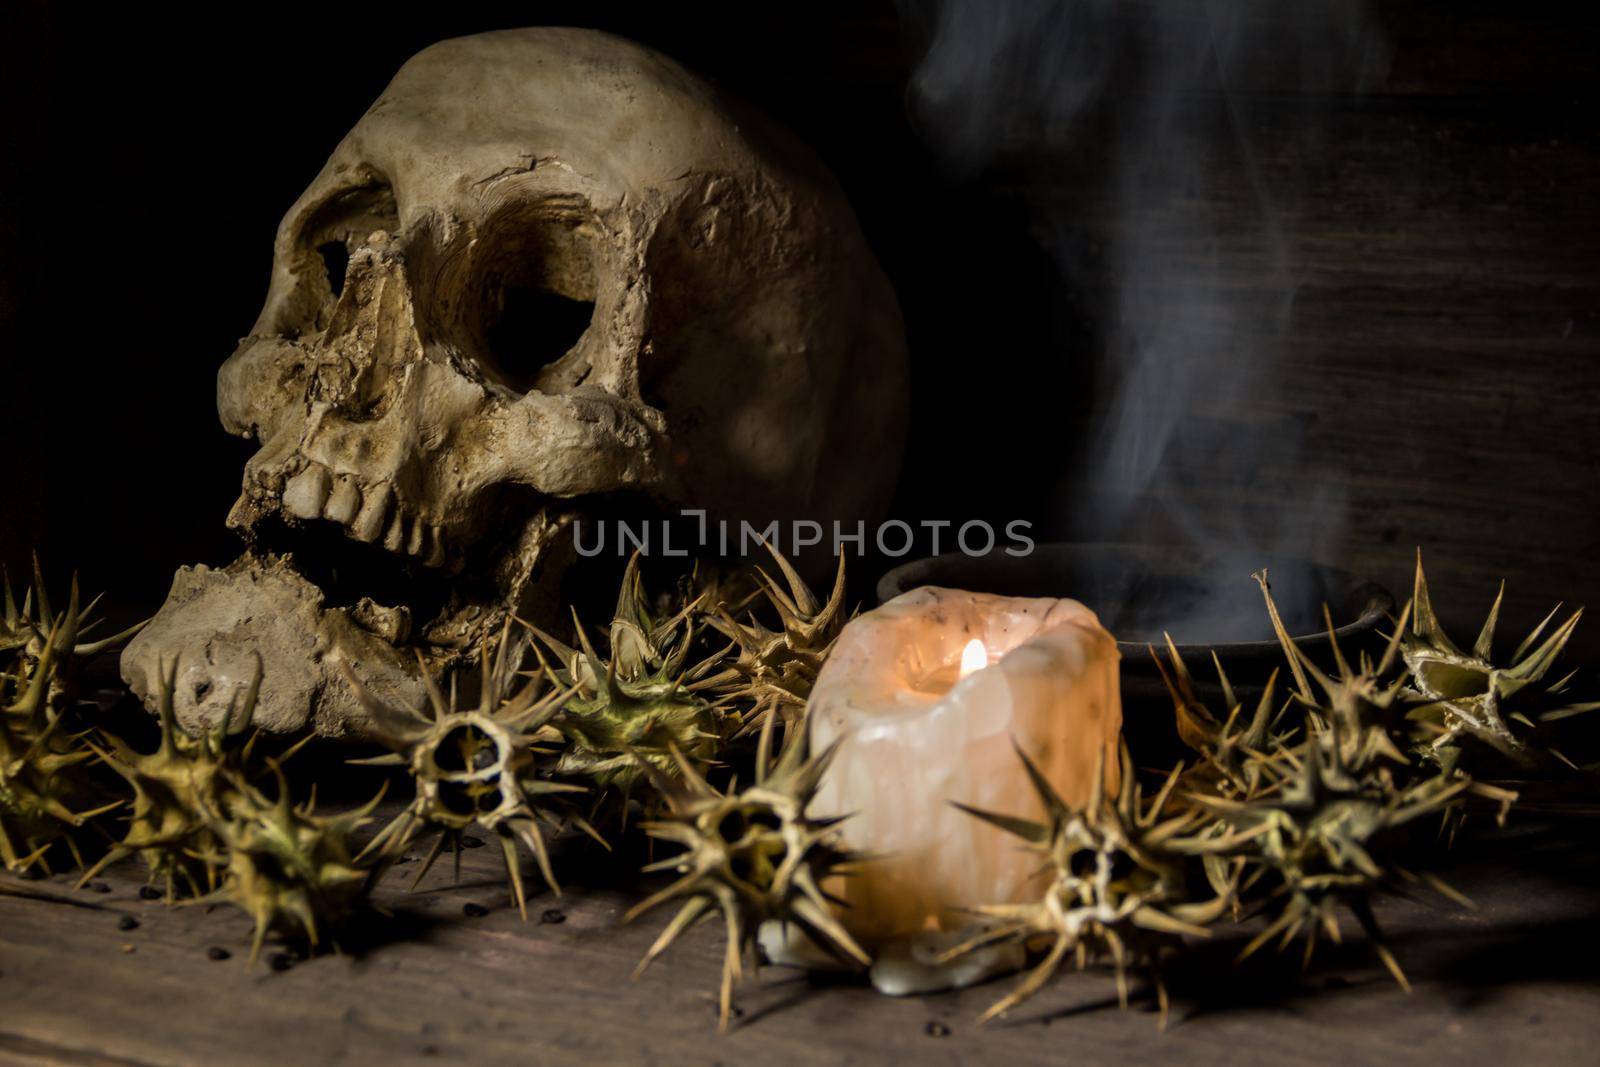 burundanga fruits and seeds with a human skull fire and smoke by GabrielaBertolini